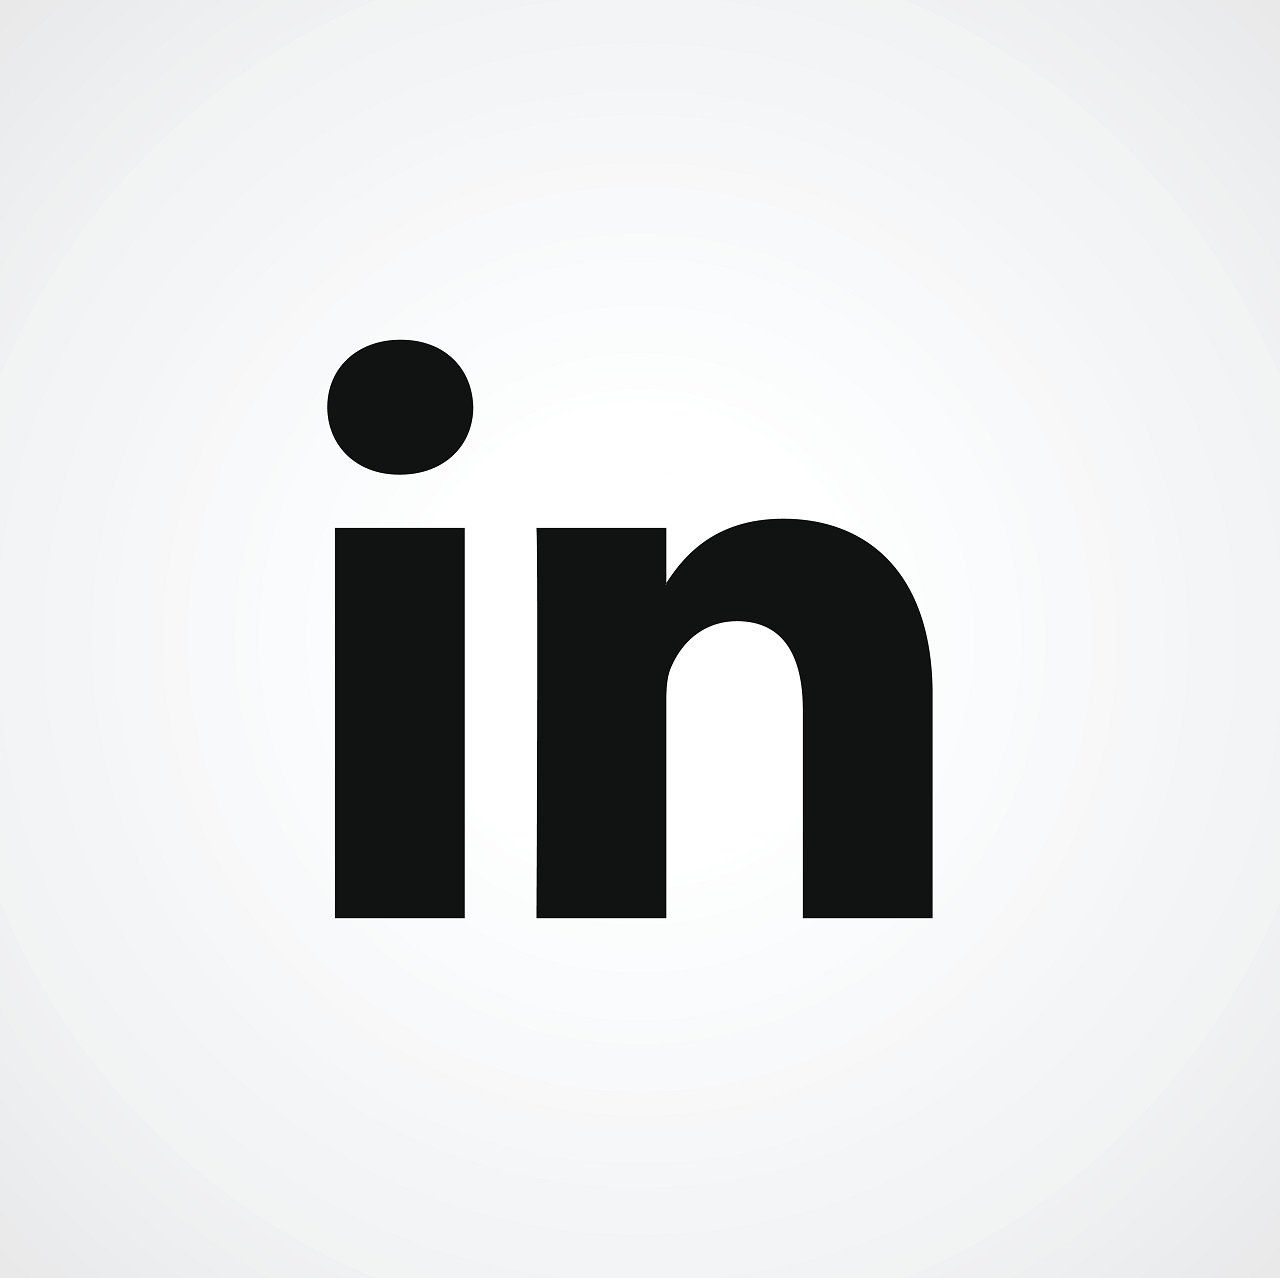 Law Firm on LinkedIn